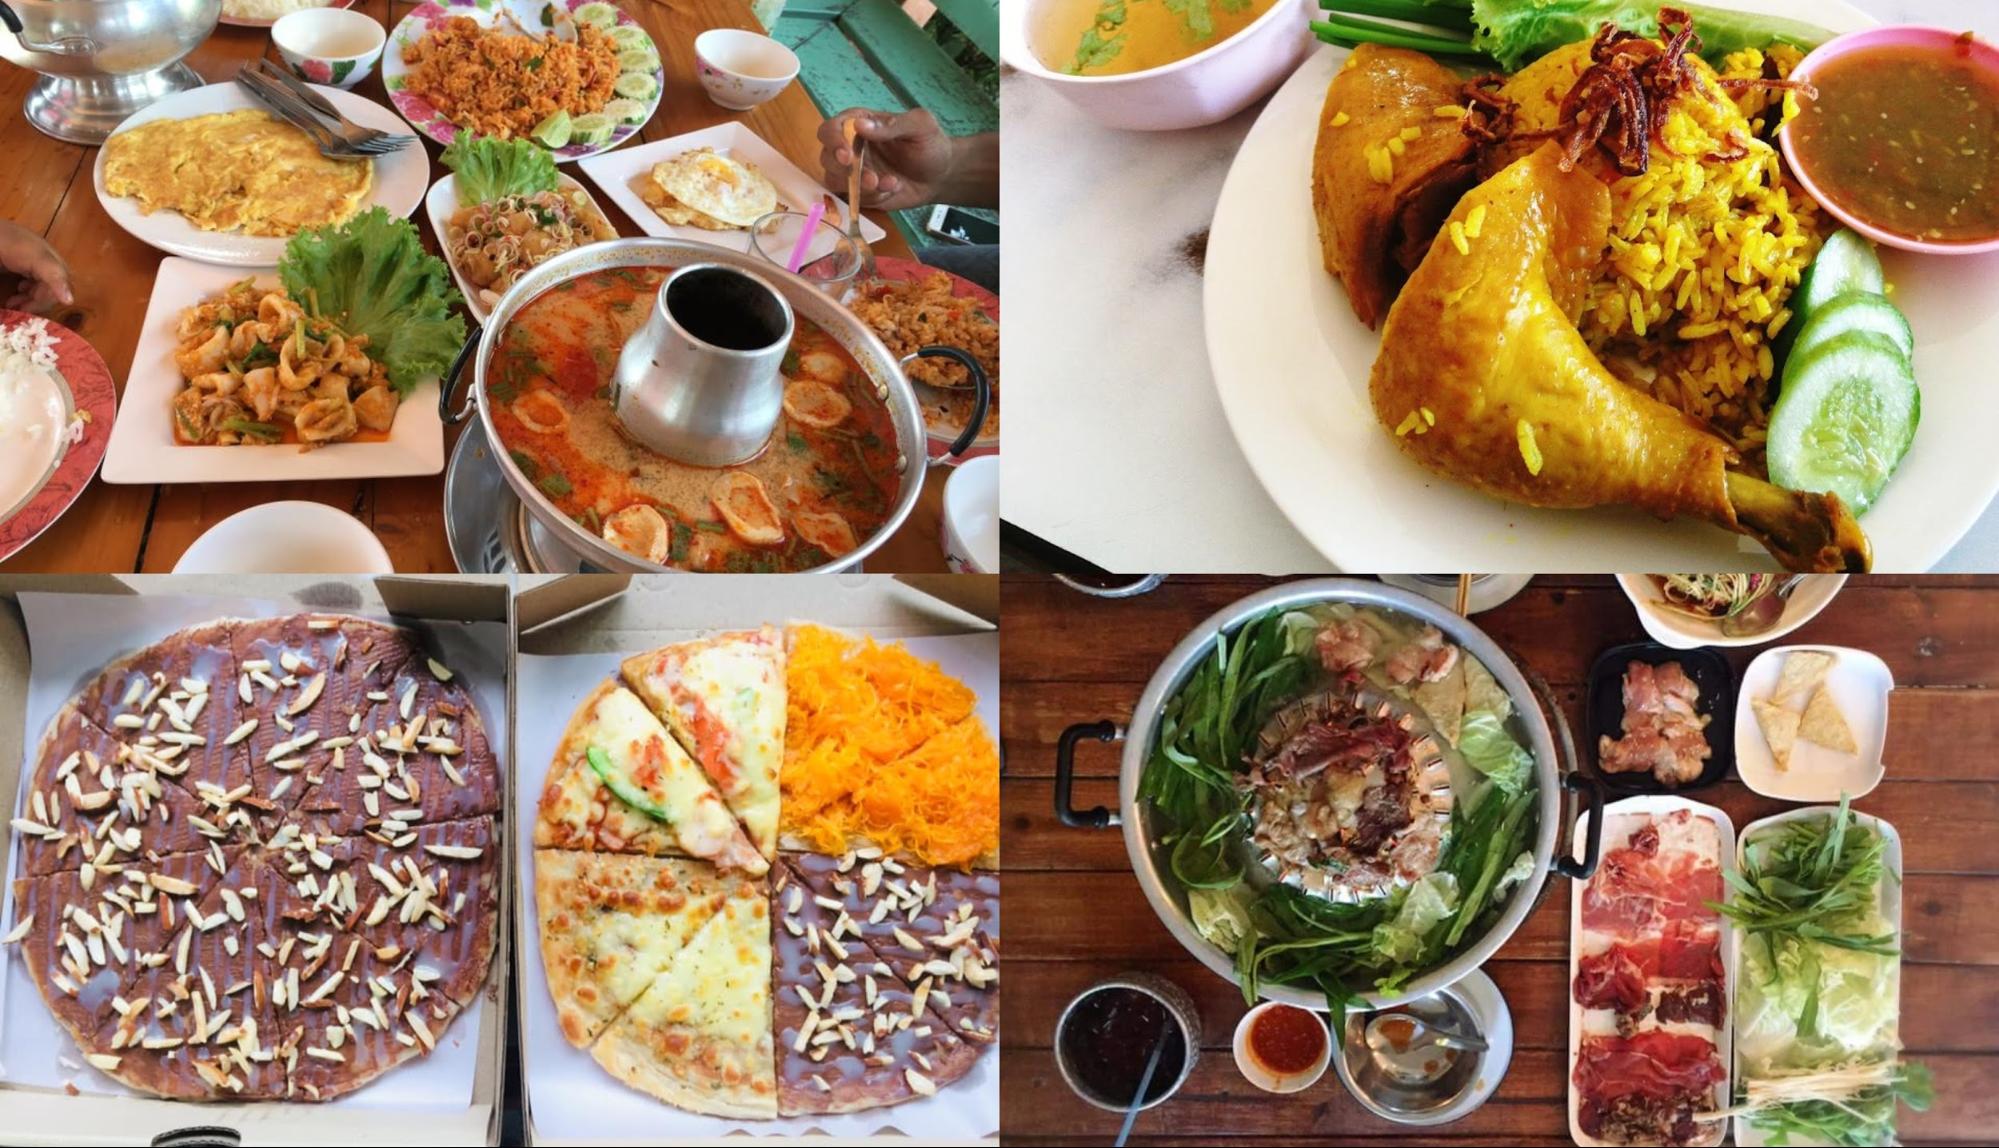 Malaysia thailand halal food festival